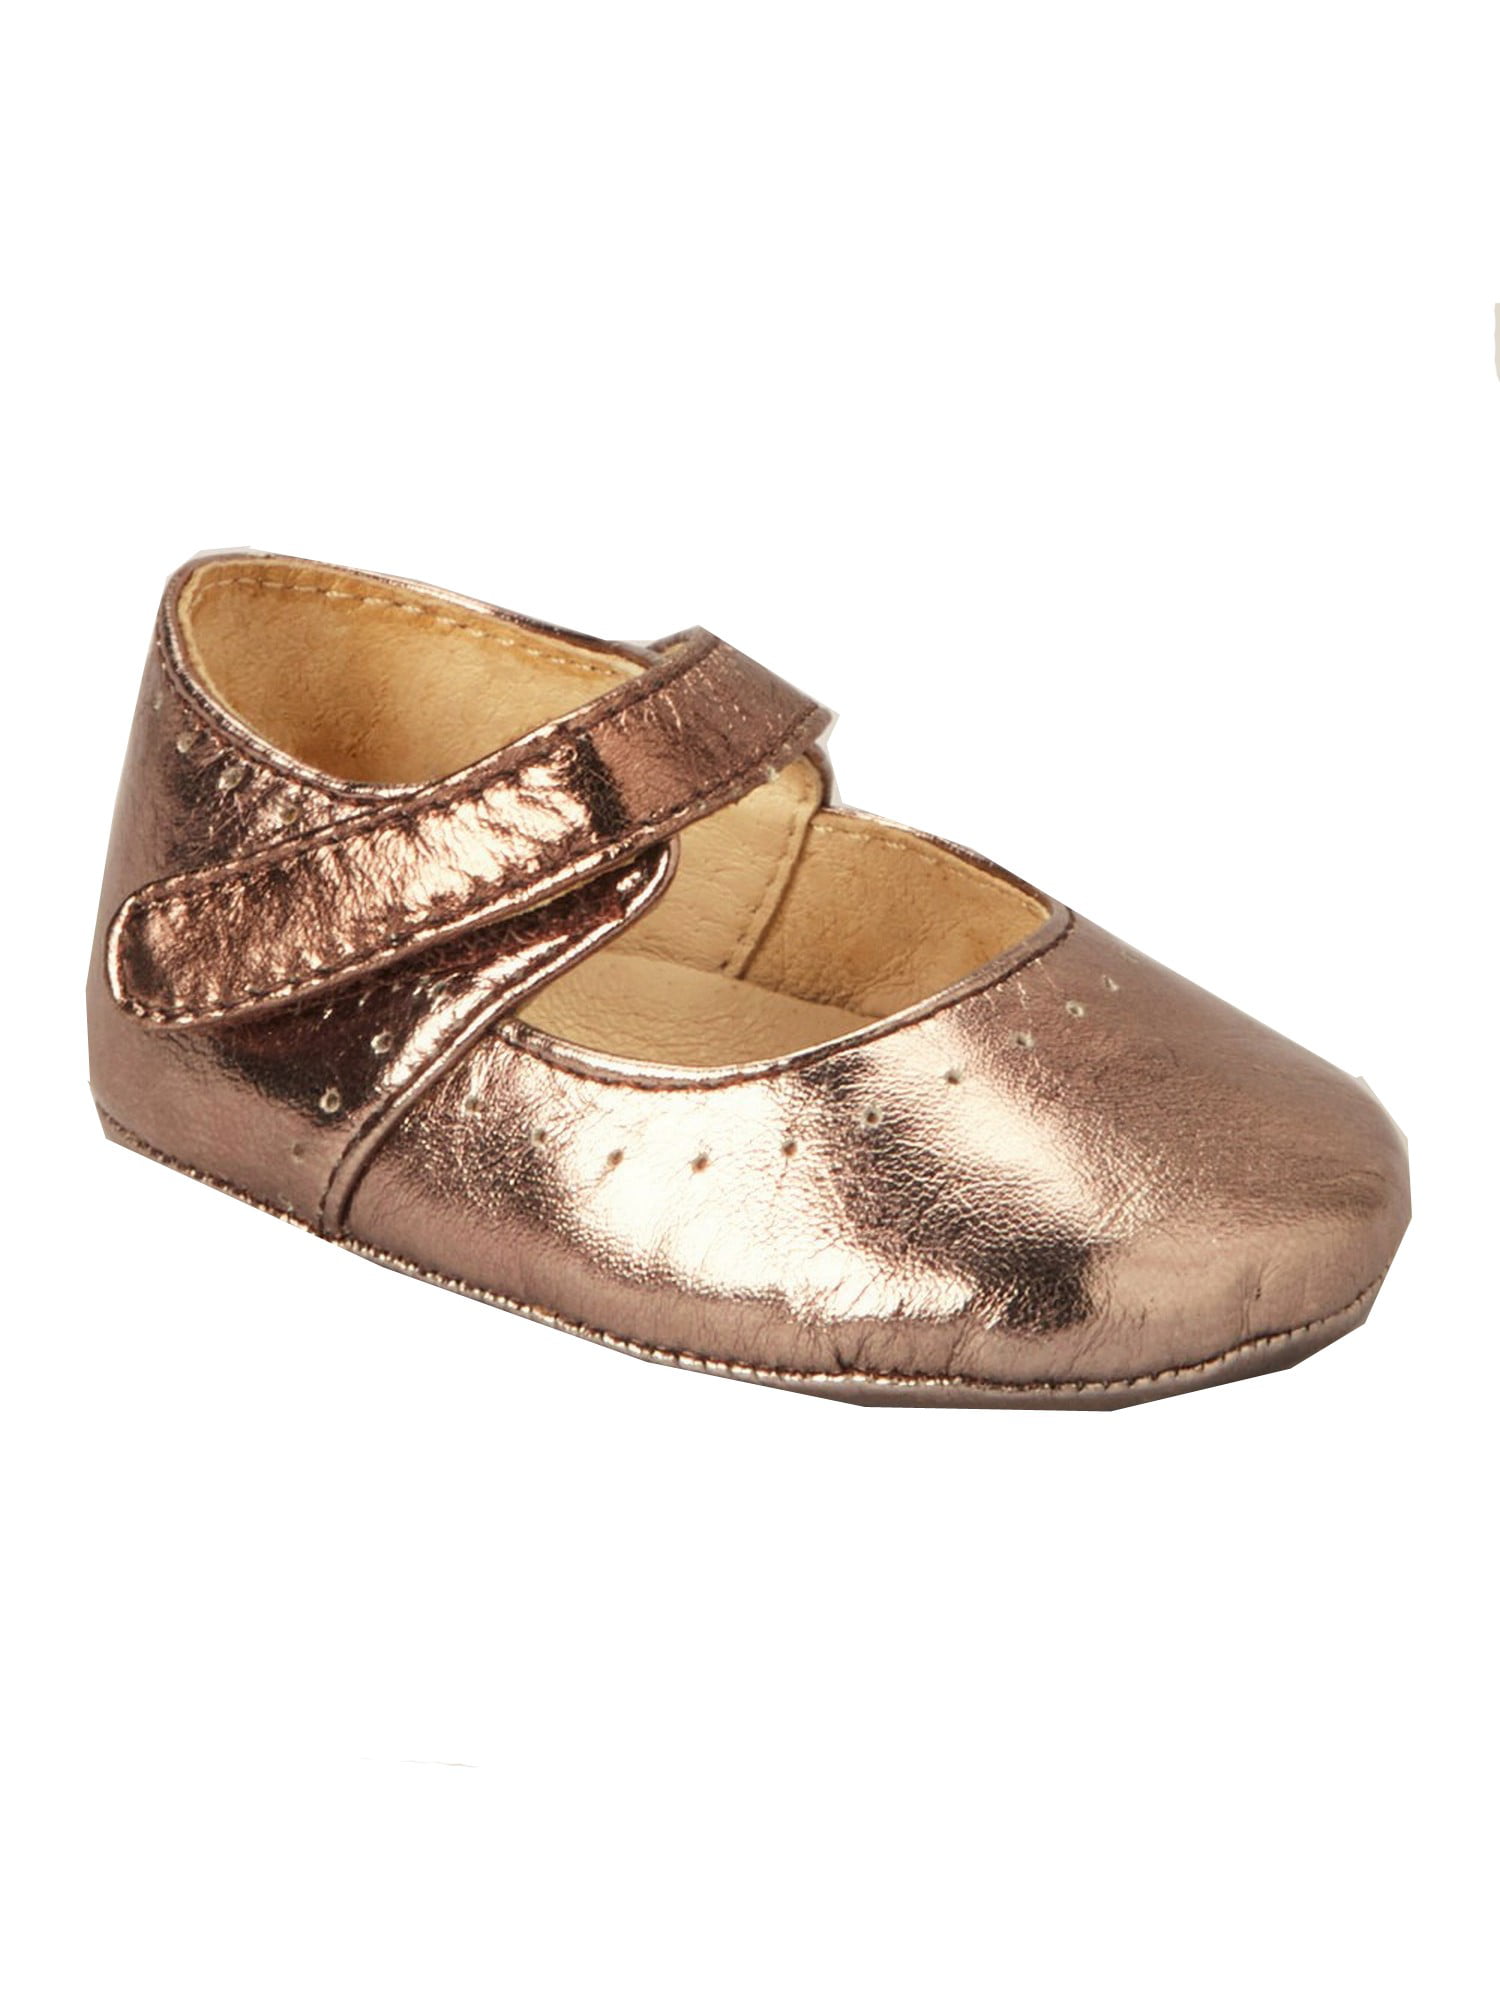 metallic mary jane shoes